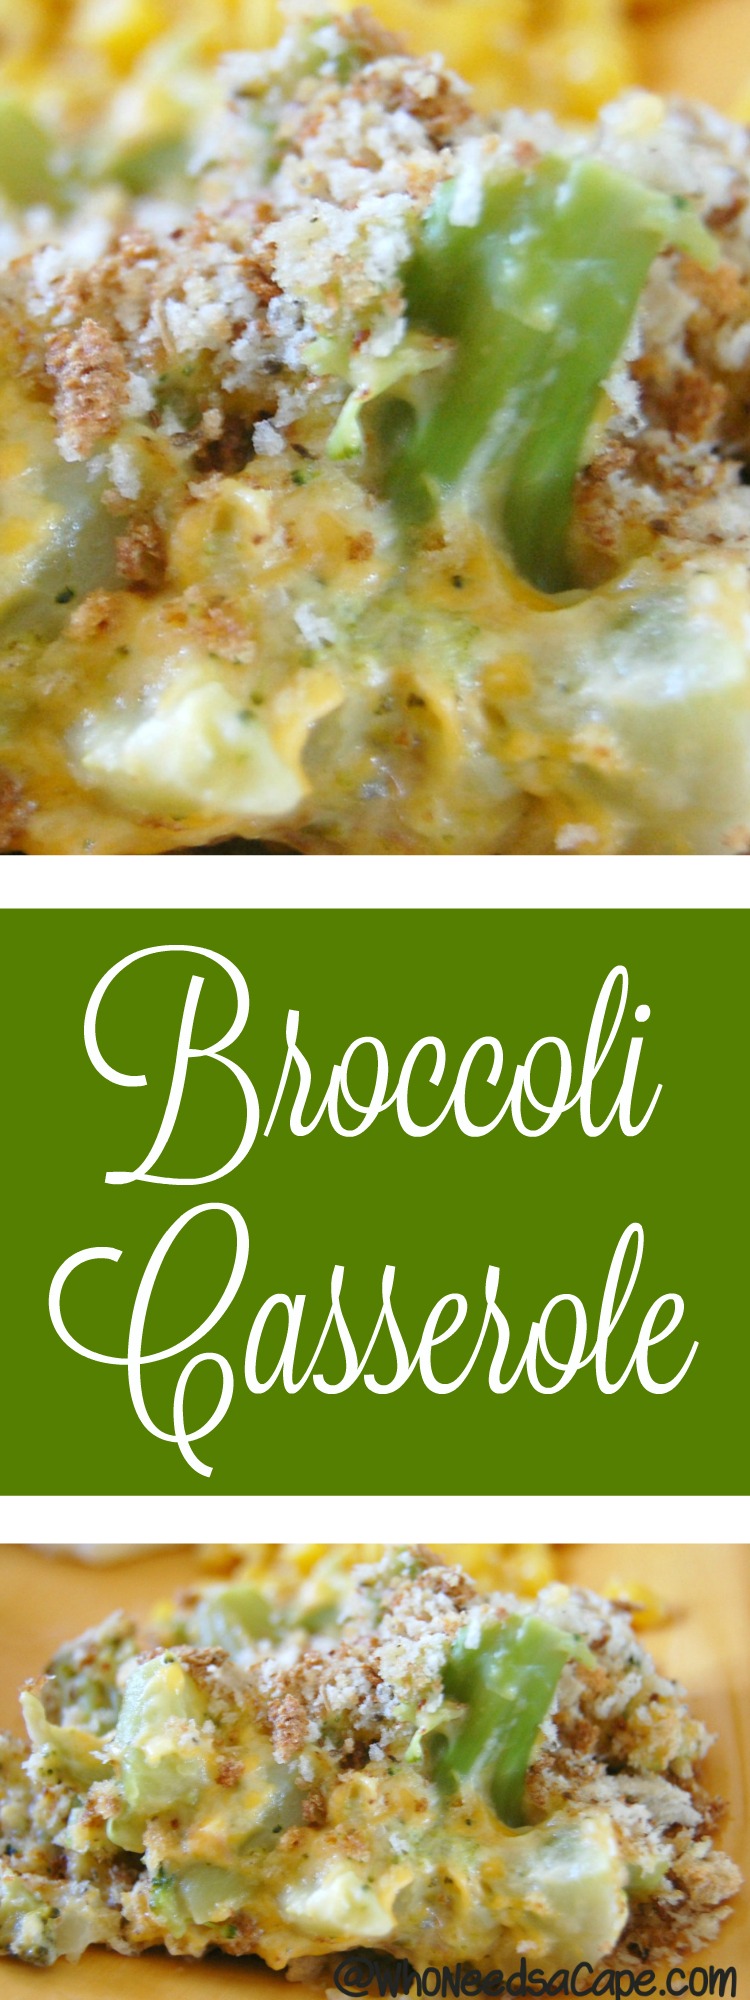 Broccoli Casserole | Who Needs A Cape?